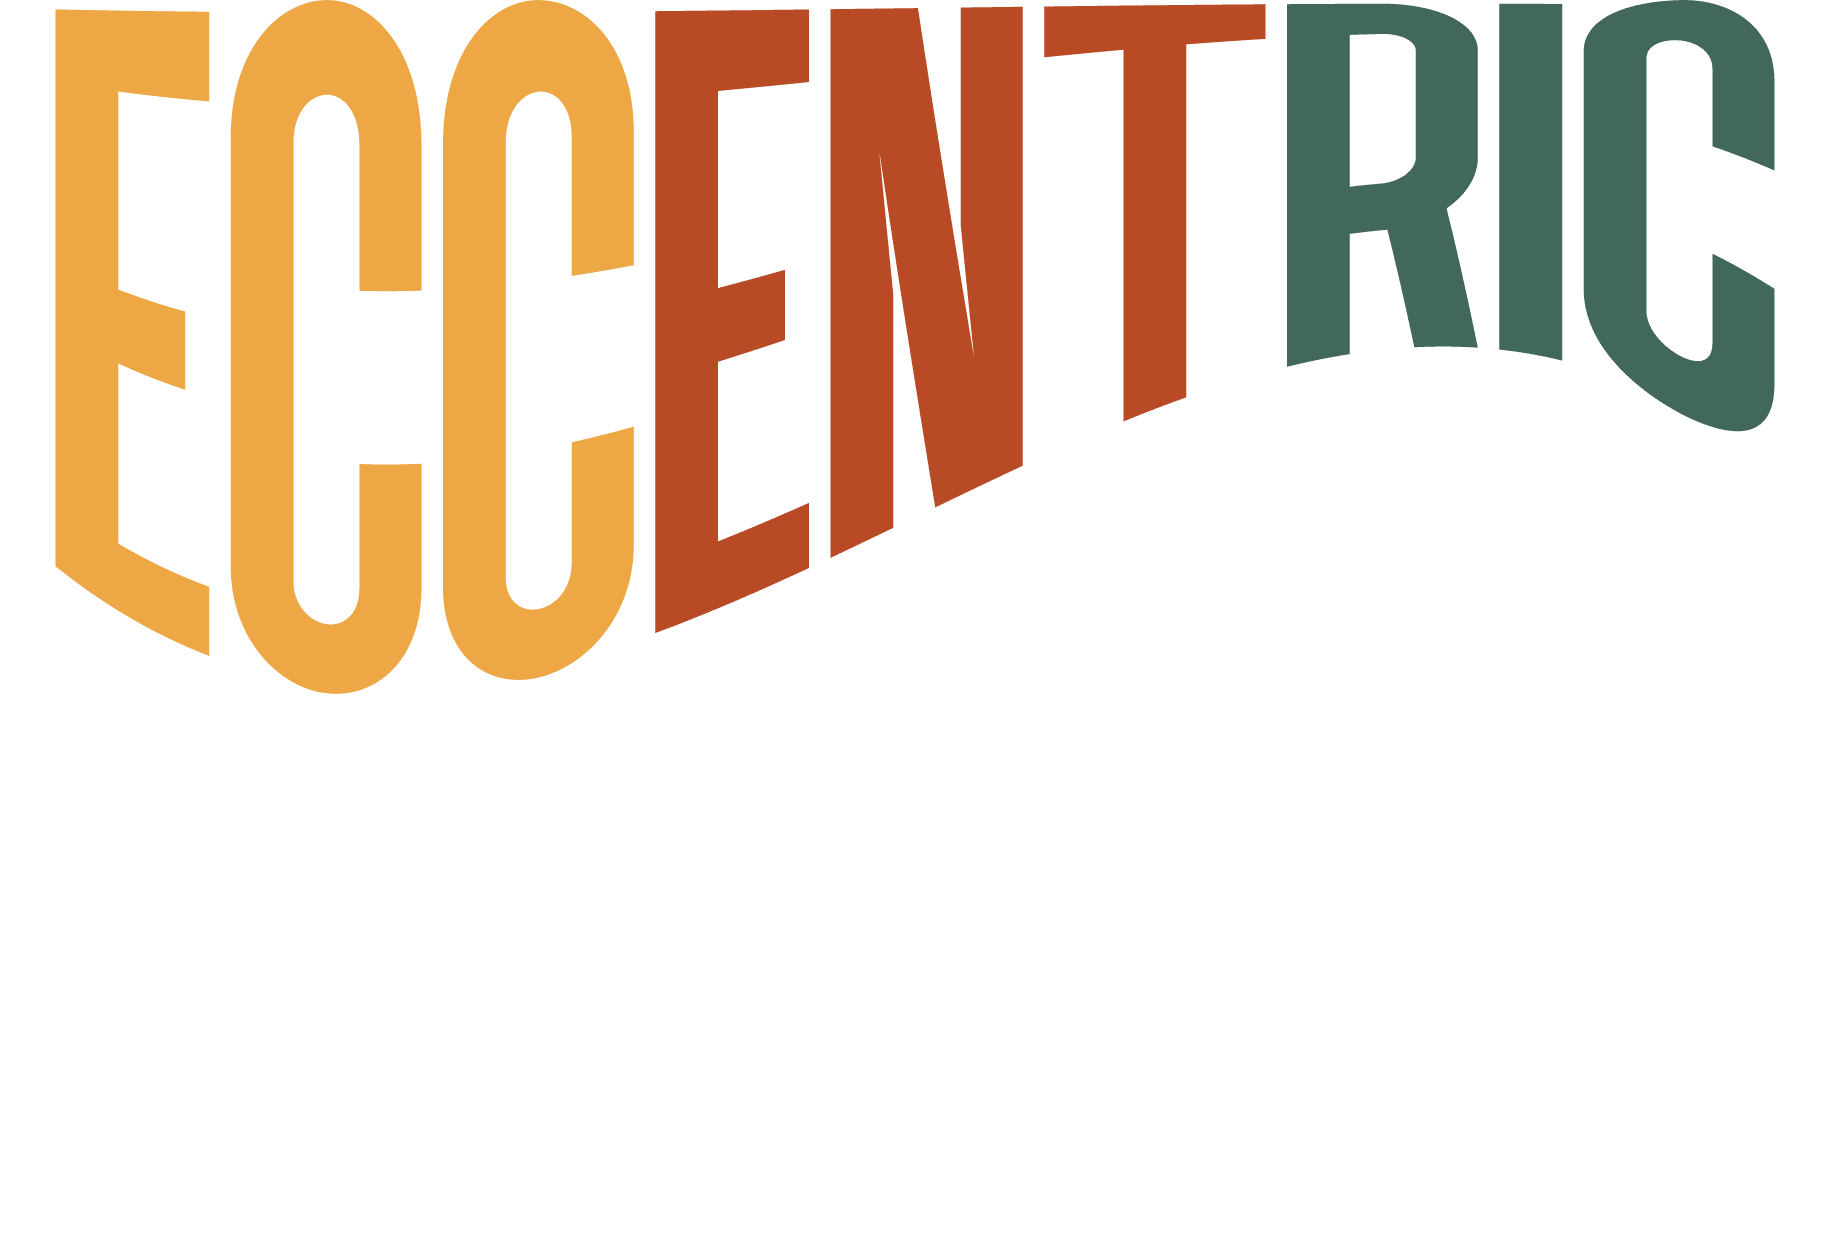 Eccentric Artists